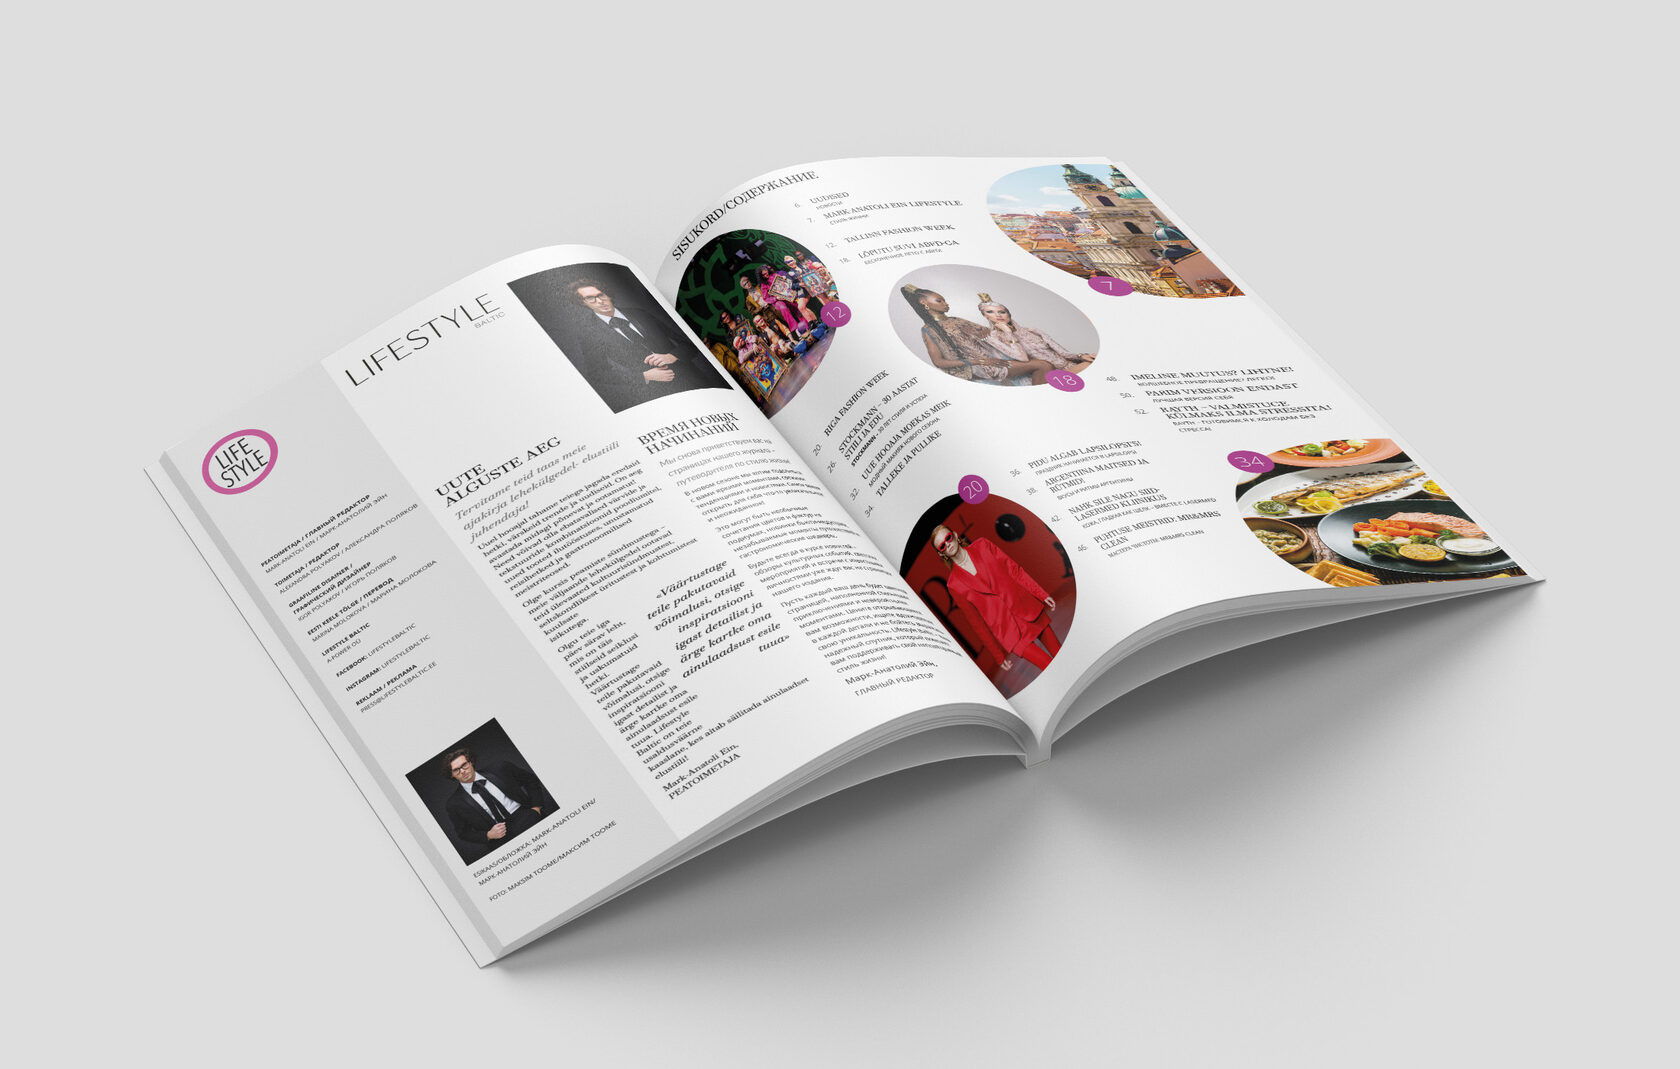 Lifestyle Baltic magazine contents